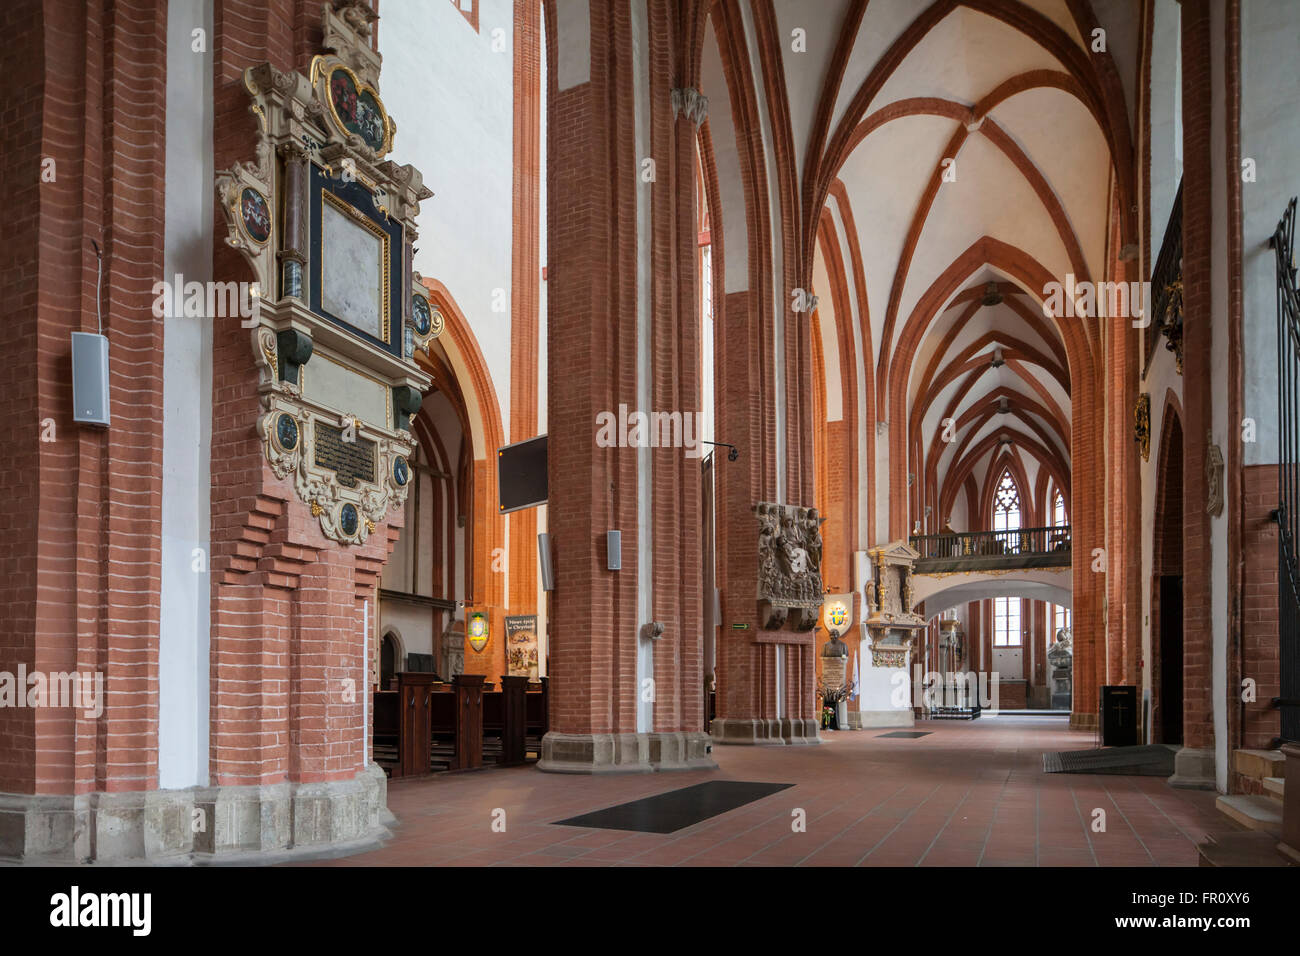 Gothic interior of St Elizabeth church in Wroclaw, Poland. Stock Photo